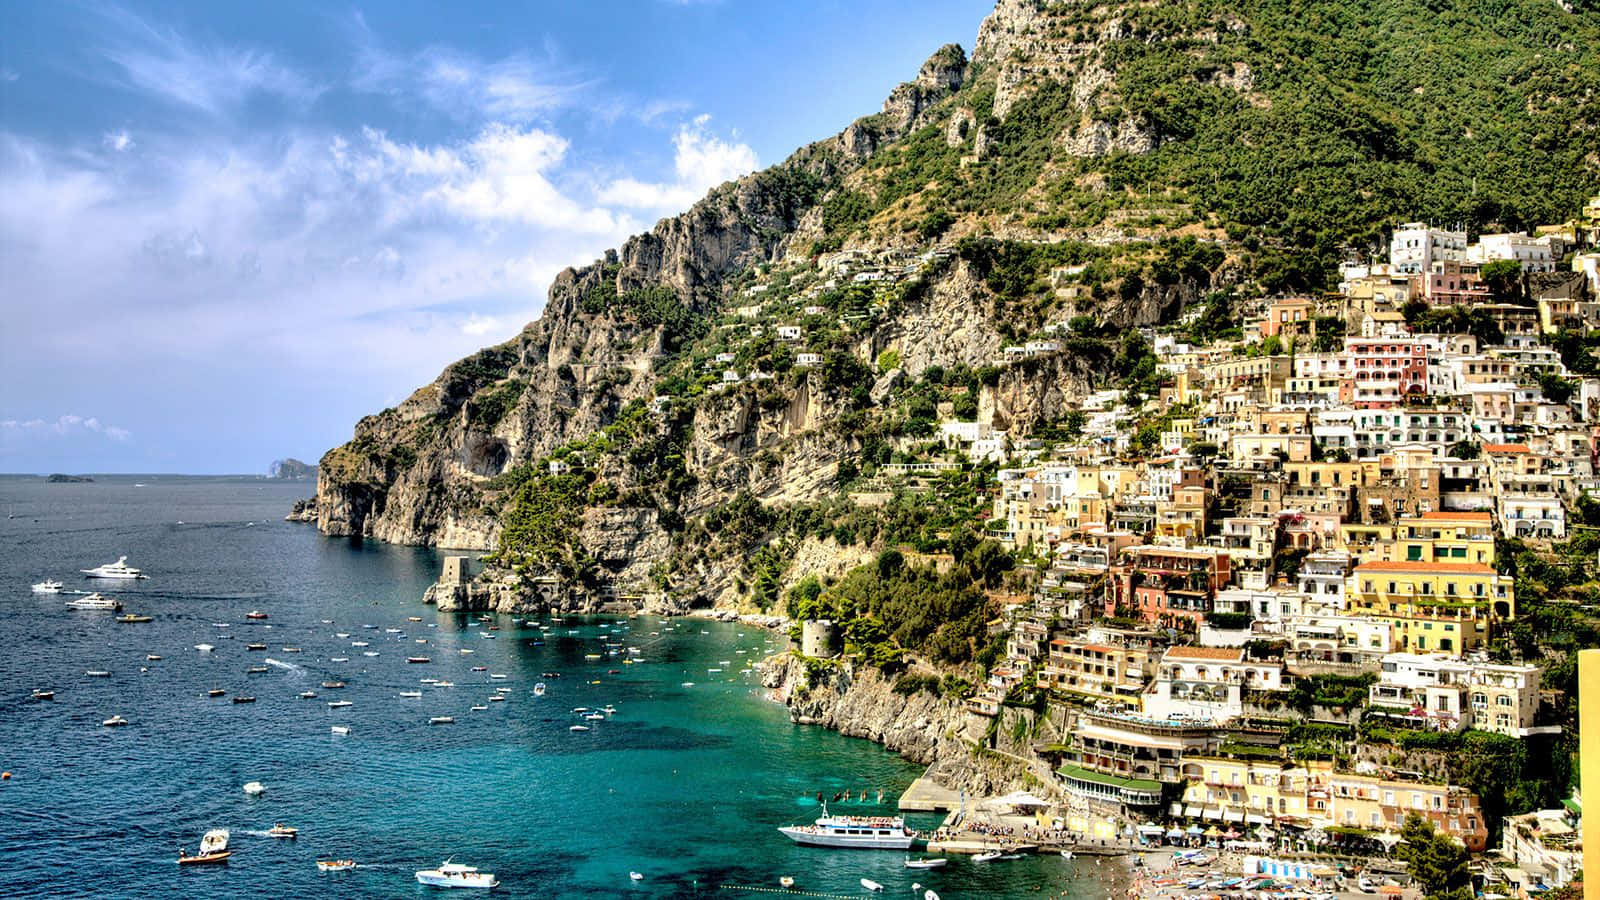 Enchanting Scenery of an Italian Island Wallpaper